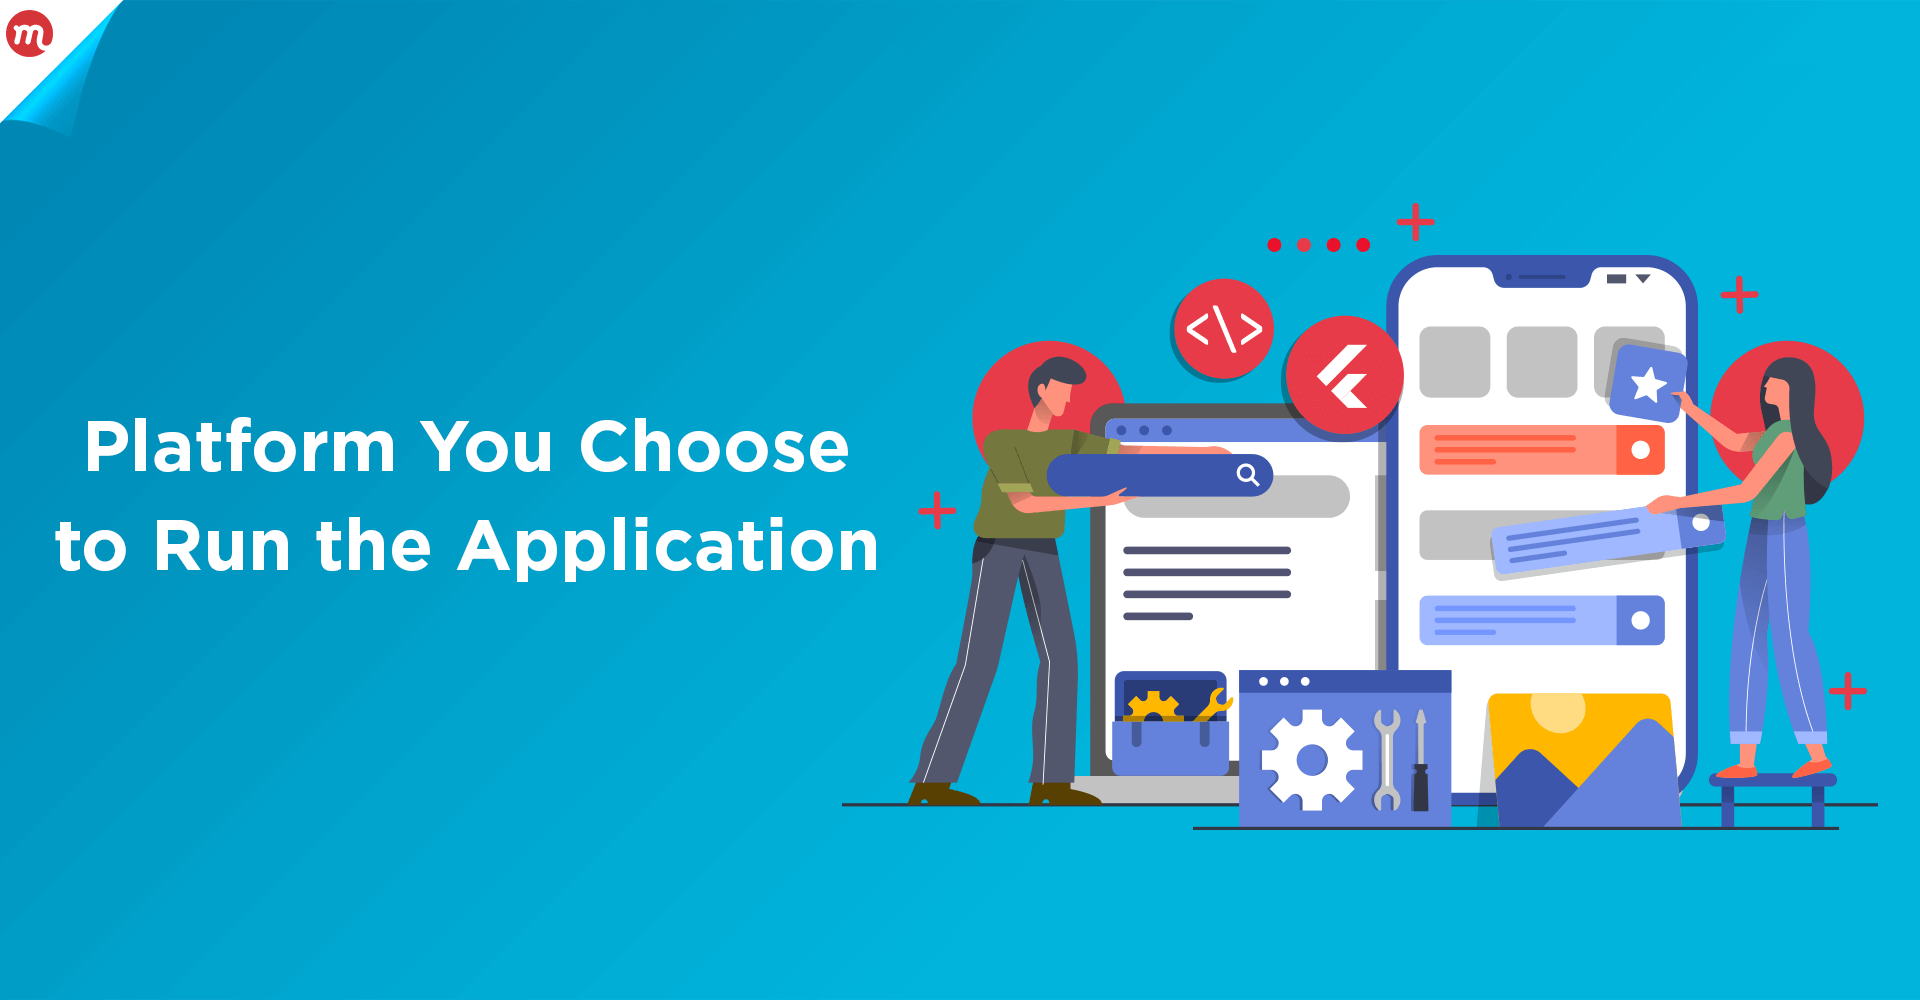 Platform You Choose to Run the Application